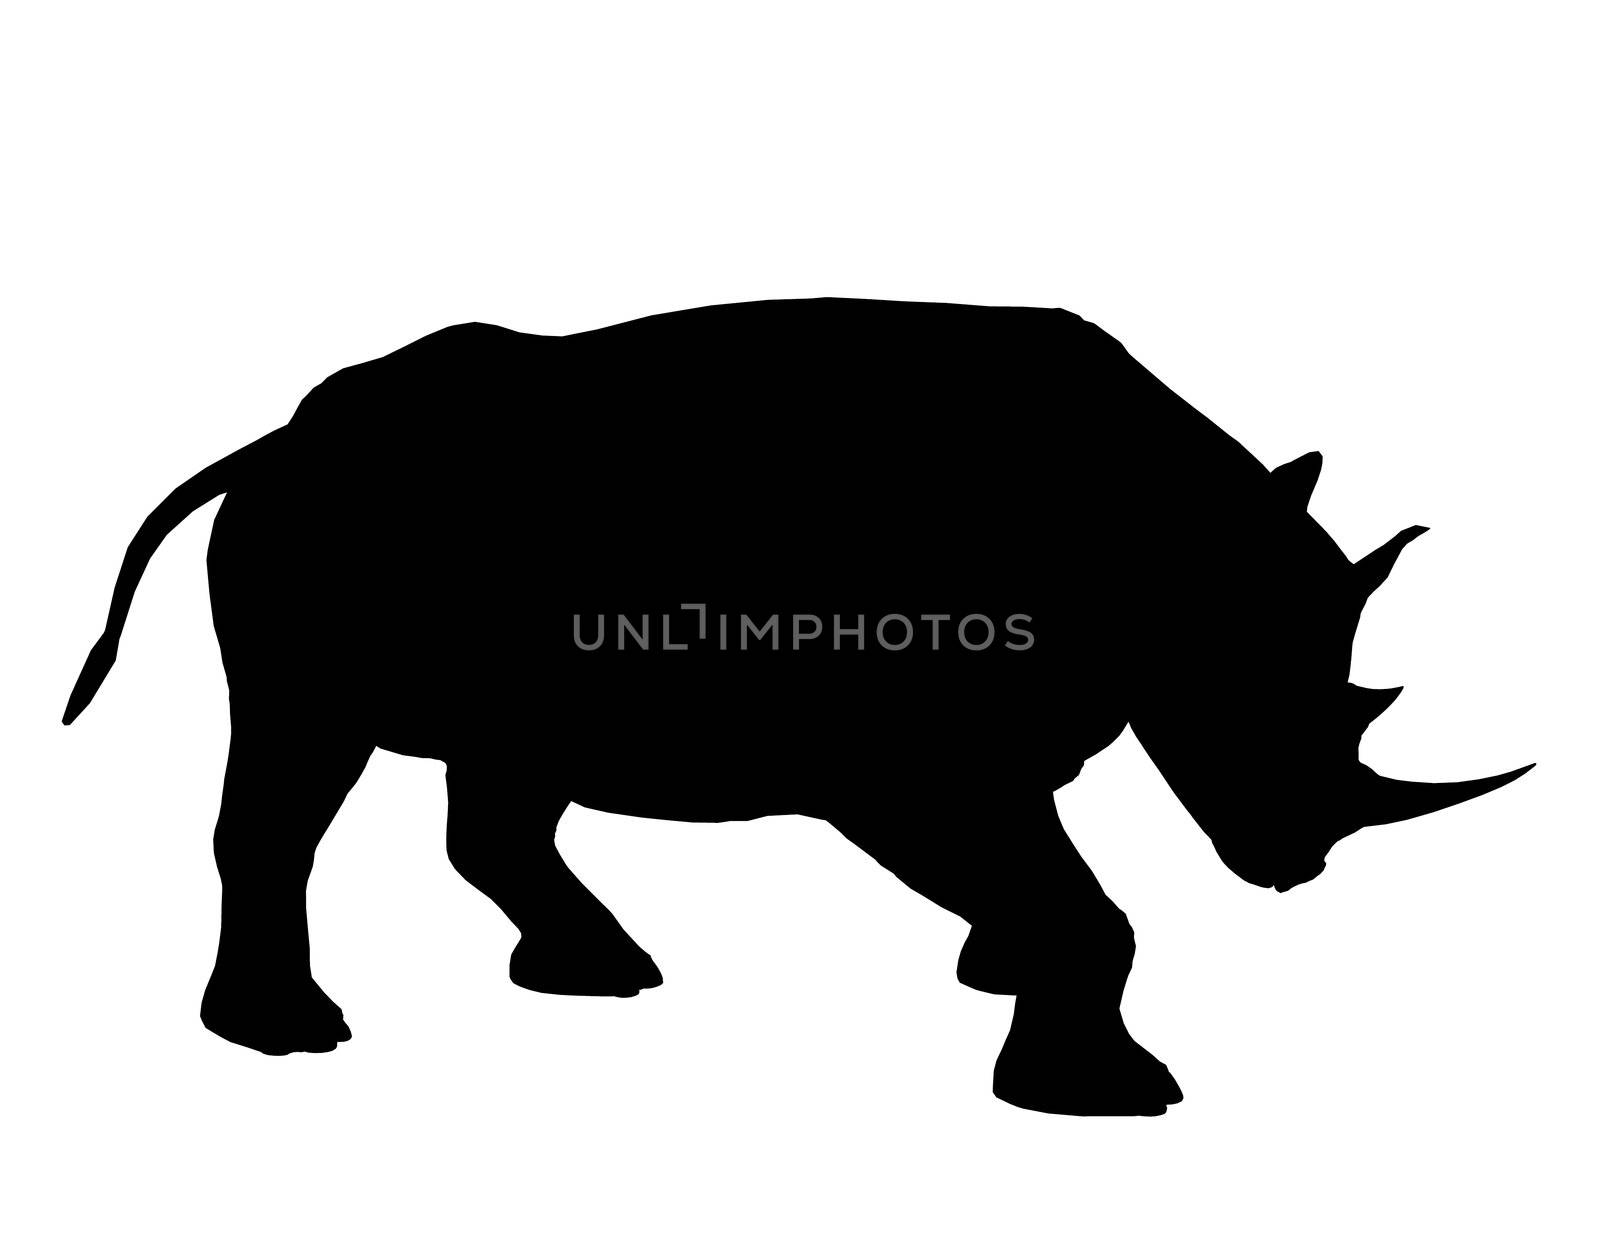 Rhinoceros illustration silhouette on a white background